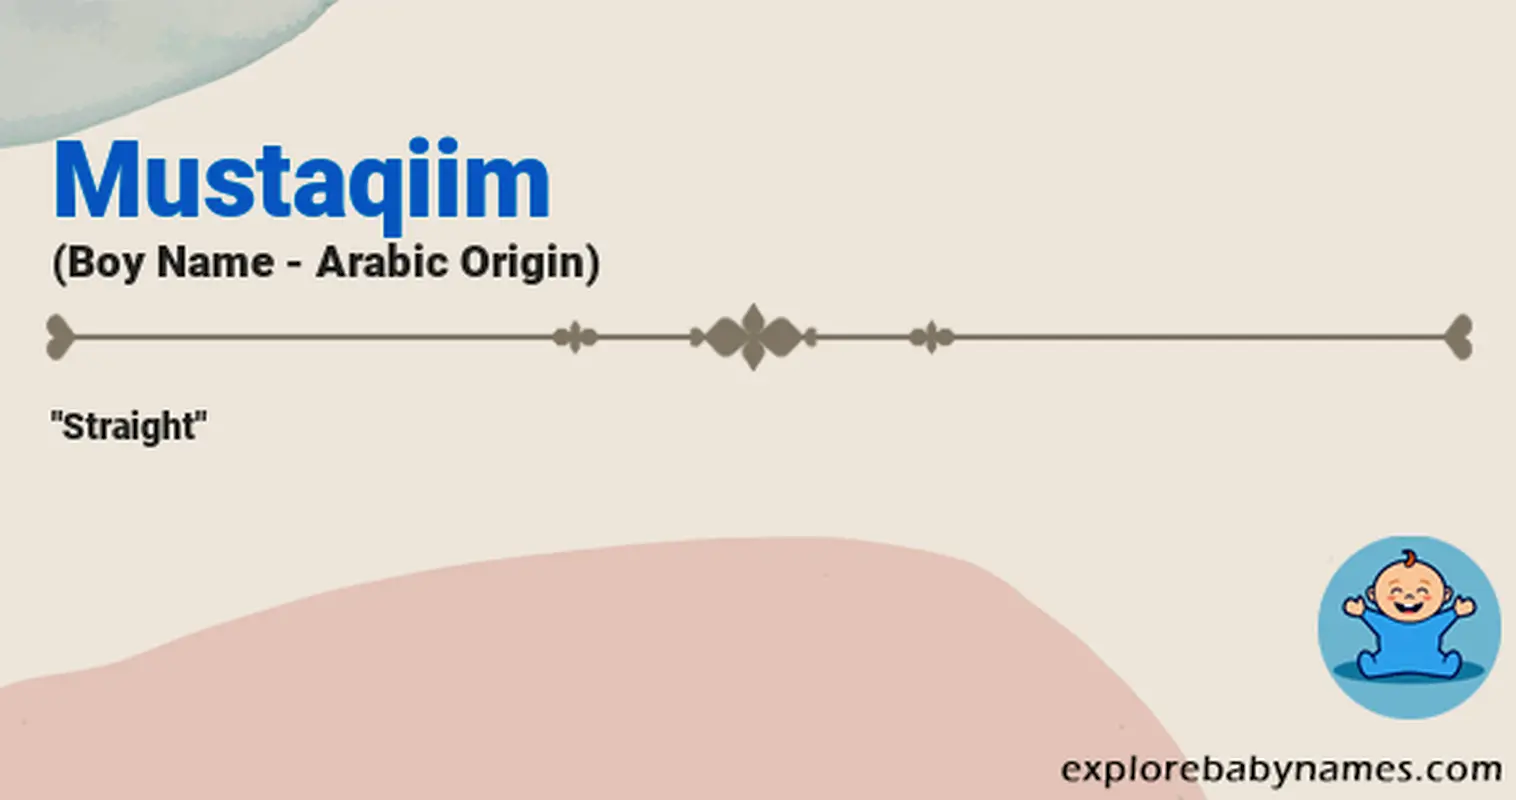 Meaning of Mustaqiim